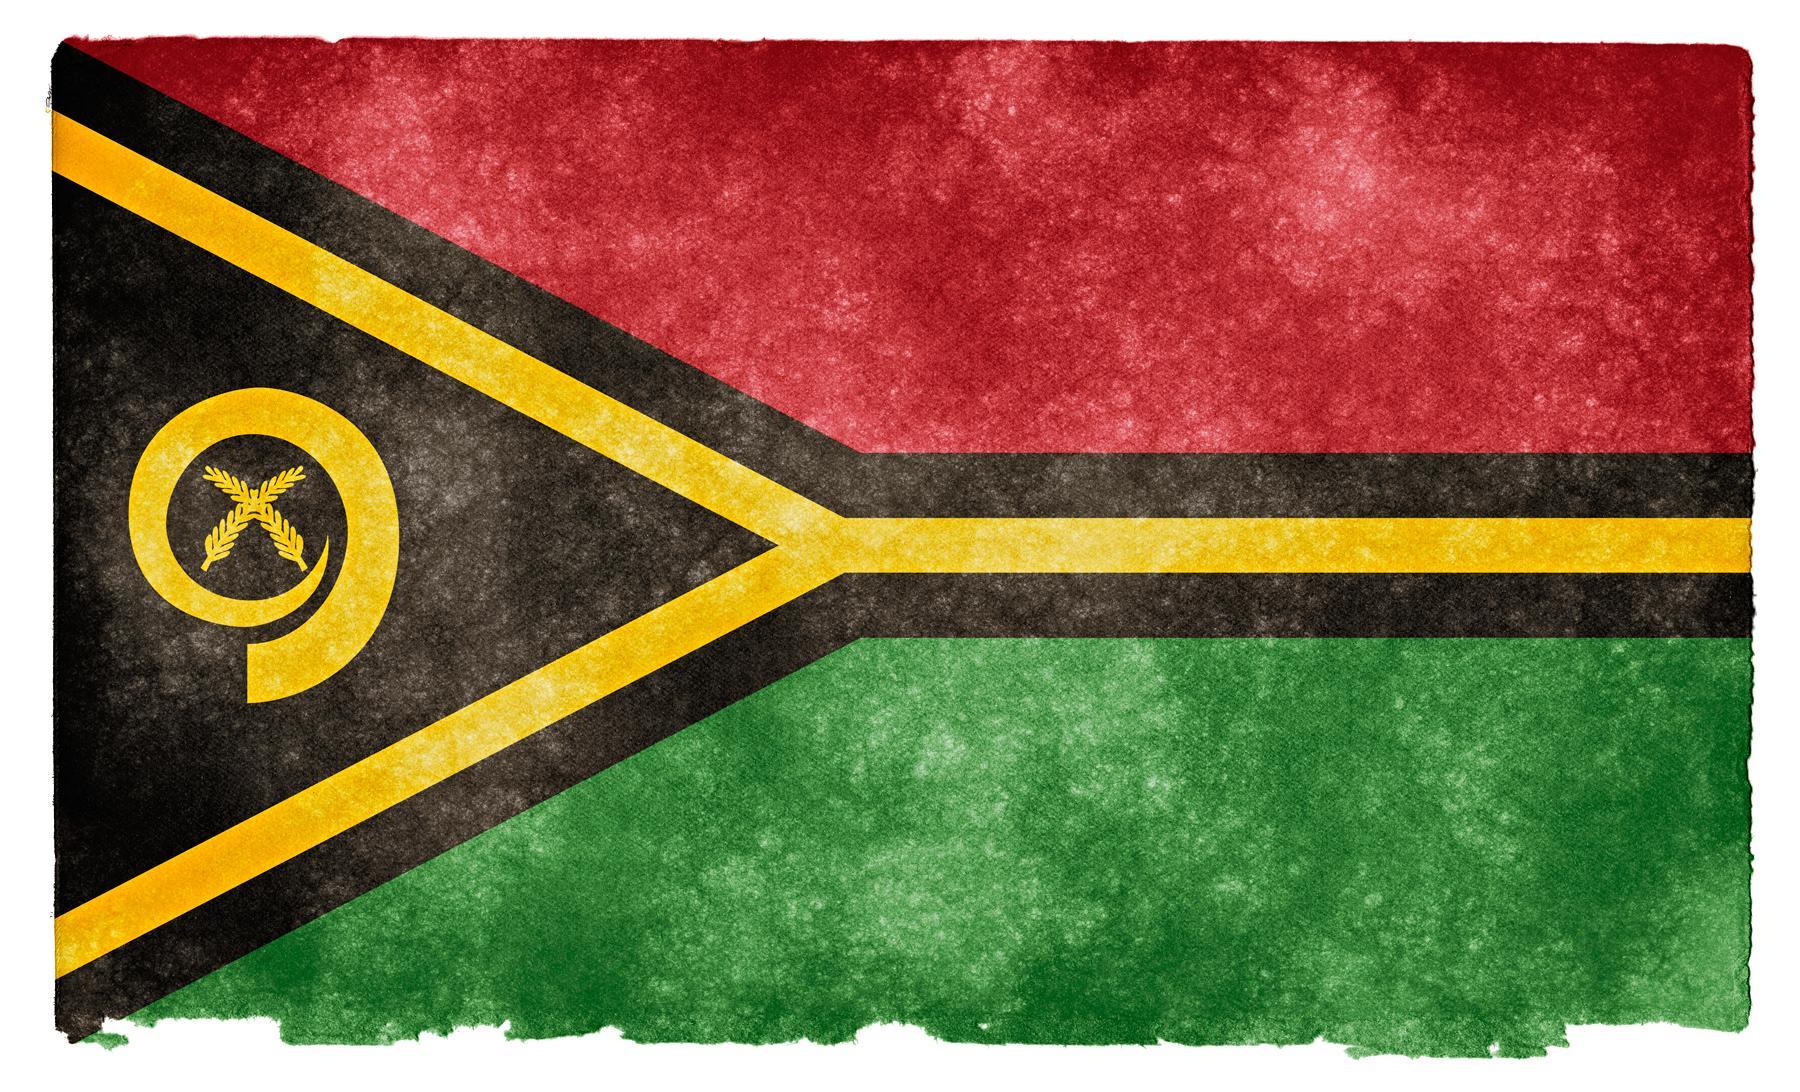 Free photo: Vanuatu Grunge Flag, Pride, Proud